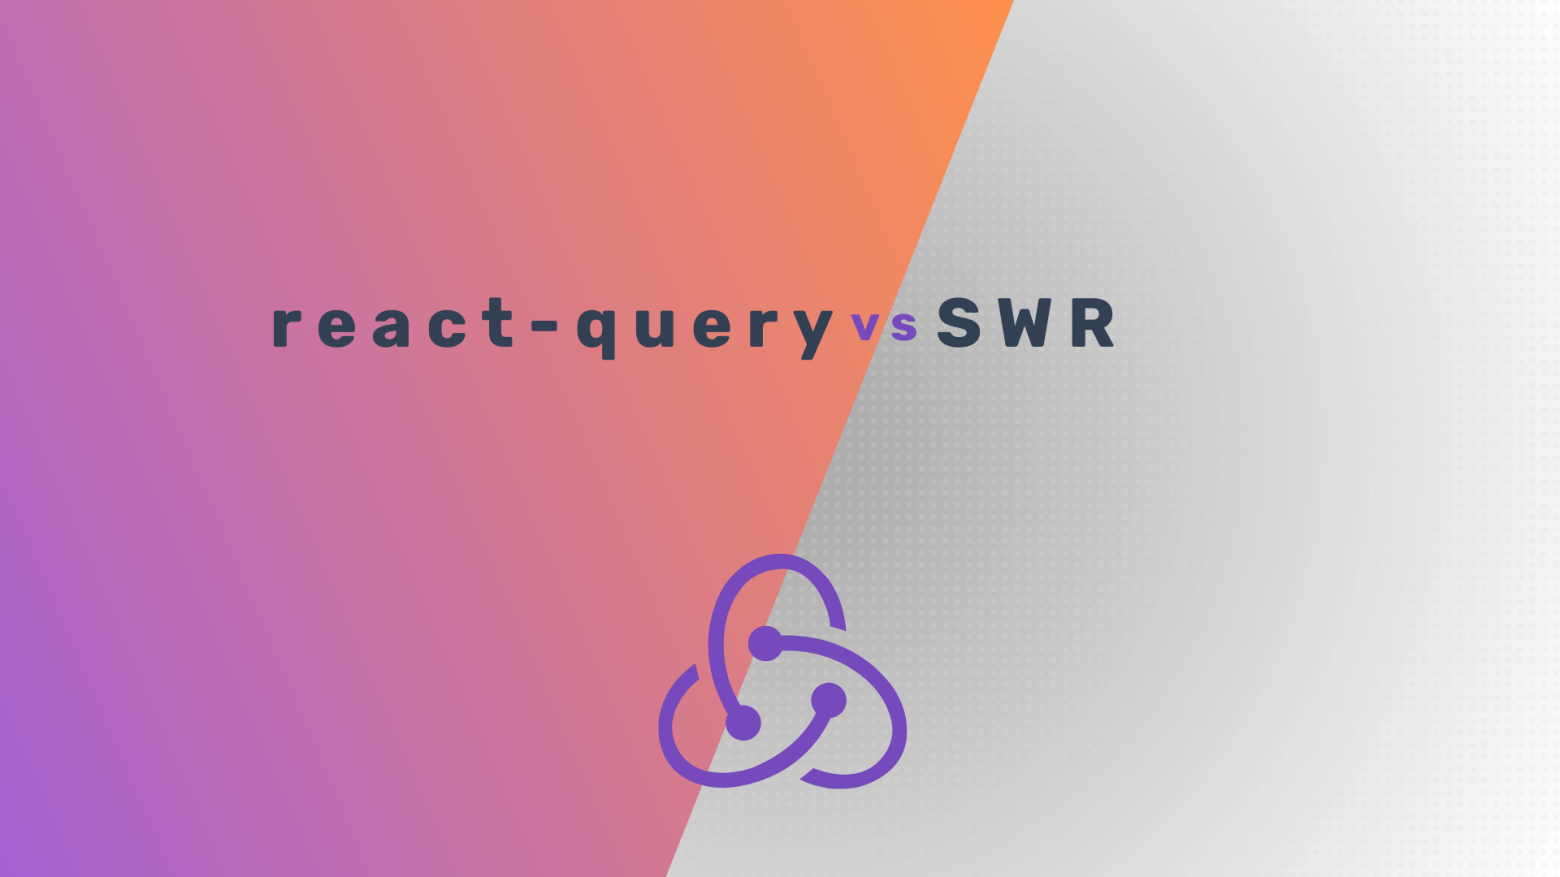 react-query vs SWR